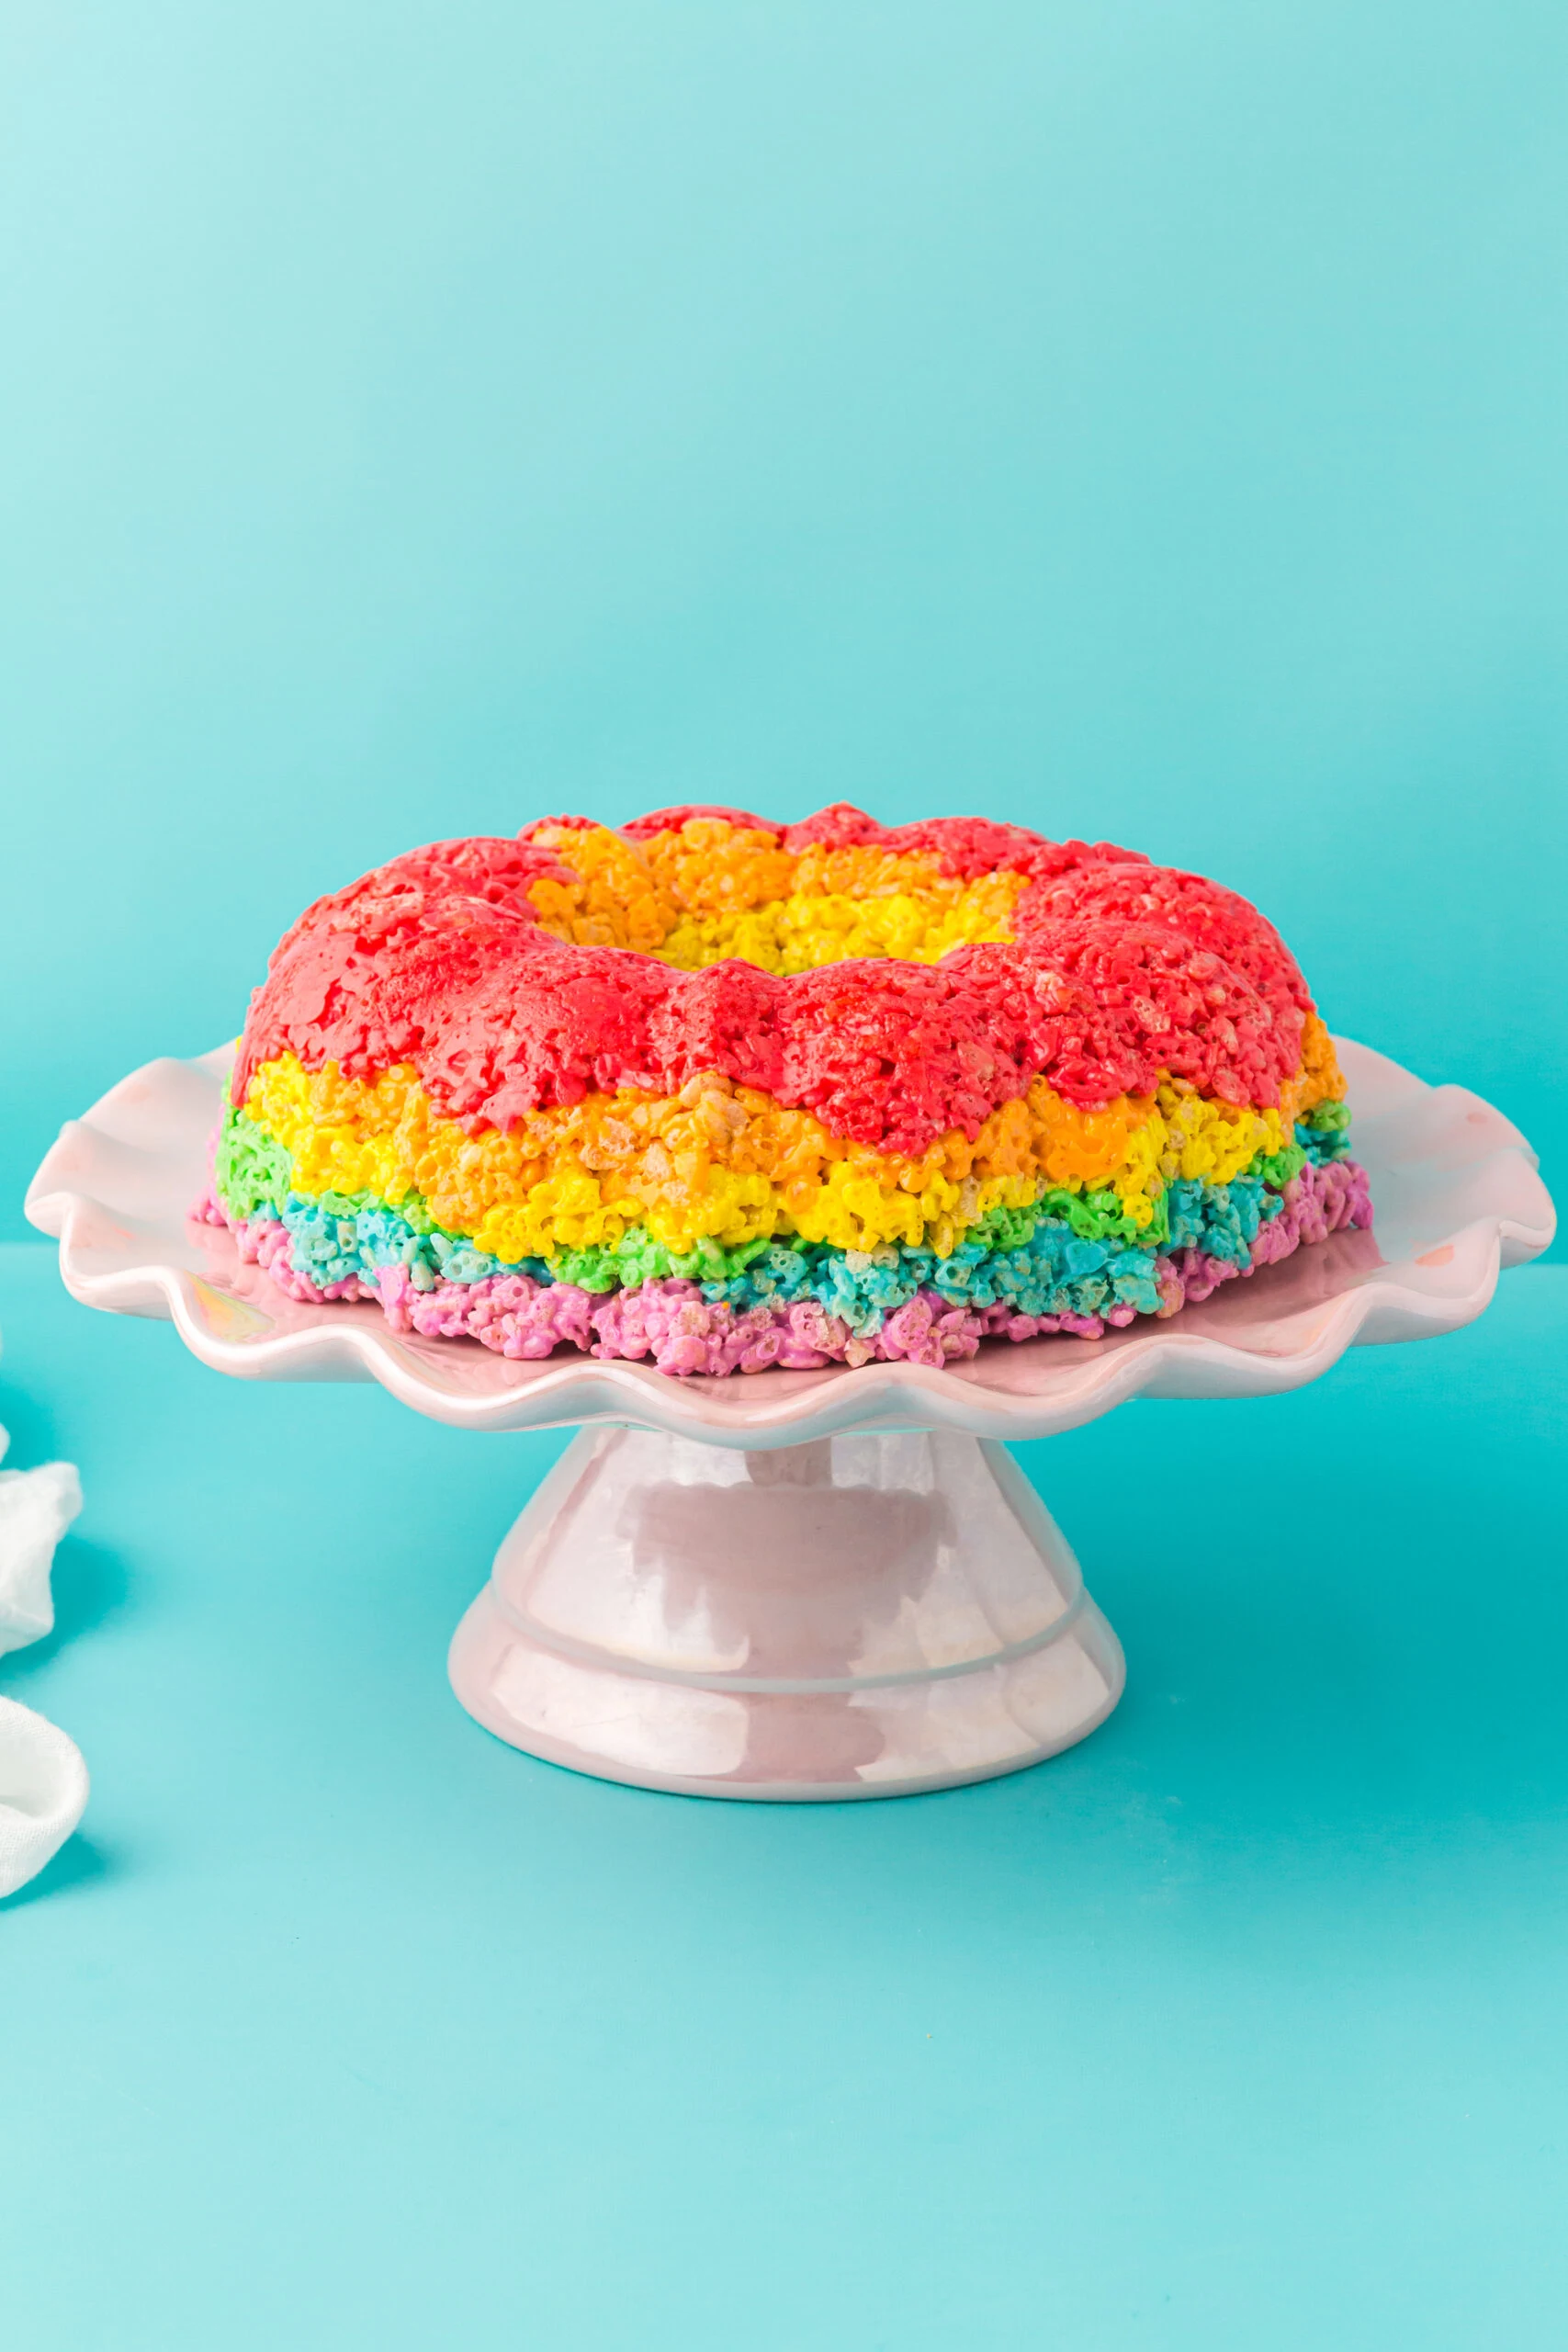 pretty rainbow bundt cake made using rice krispies cereal